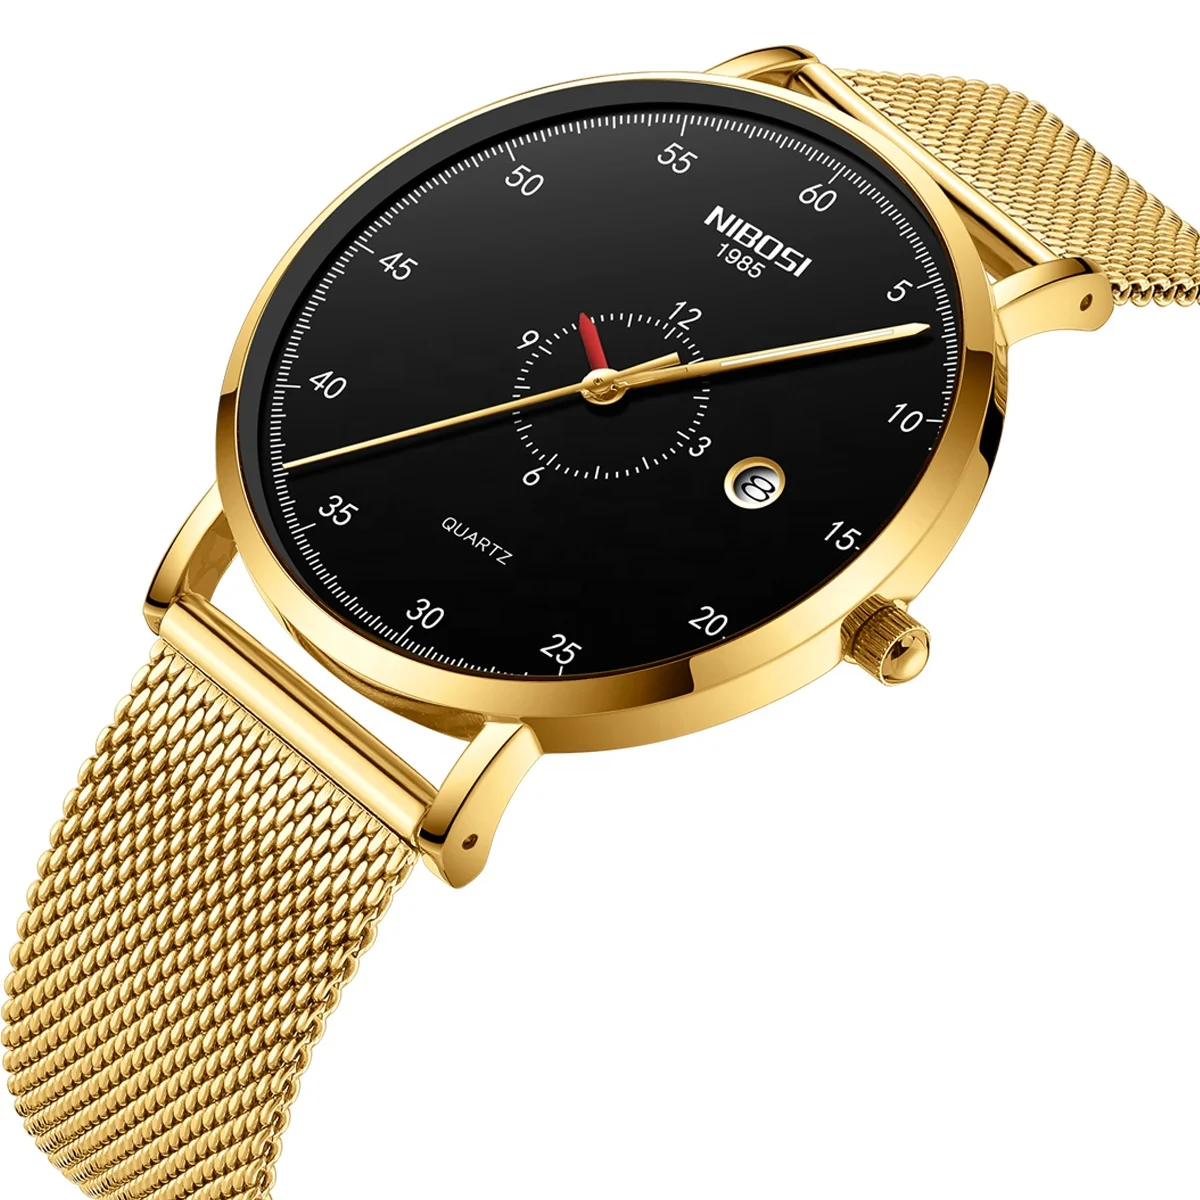 

NIBOSI 2360 Mens Watches Top Brand Luxury Fashion Watch Slim Mesh Date Waterproof Quartz Watch dropshipping